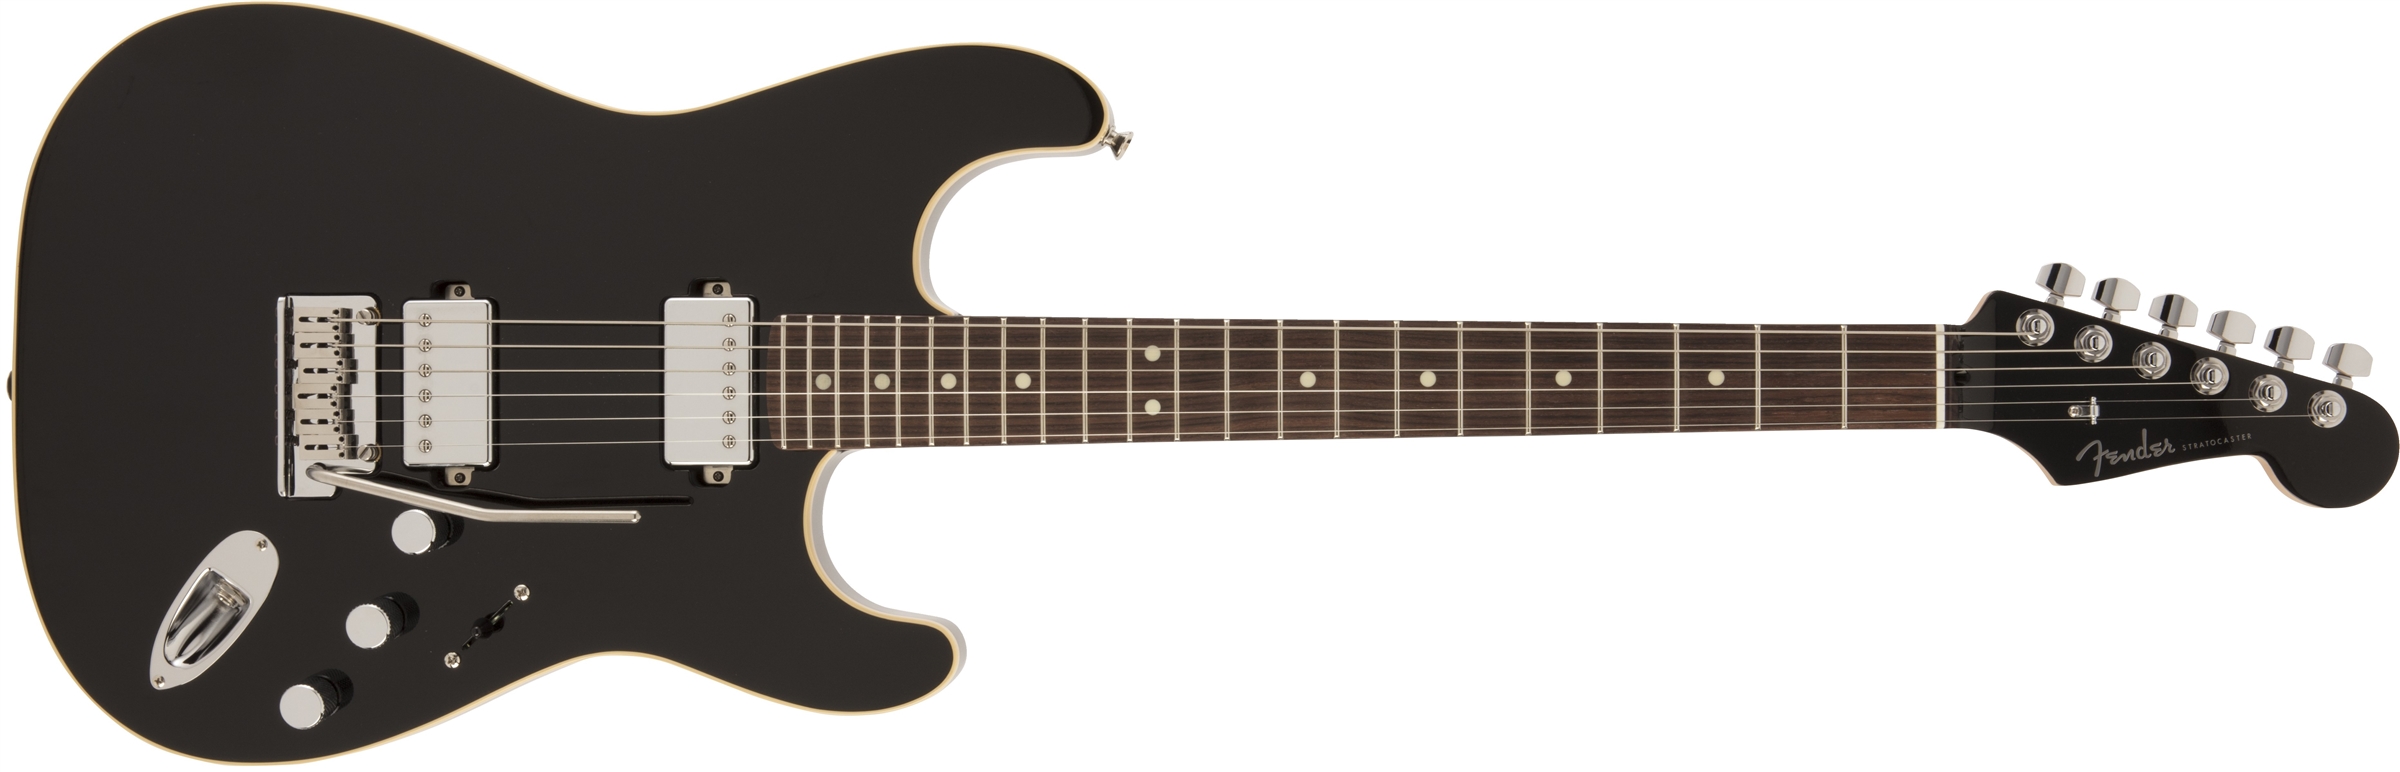 A Japan-only Fender Modern Stratocaster